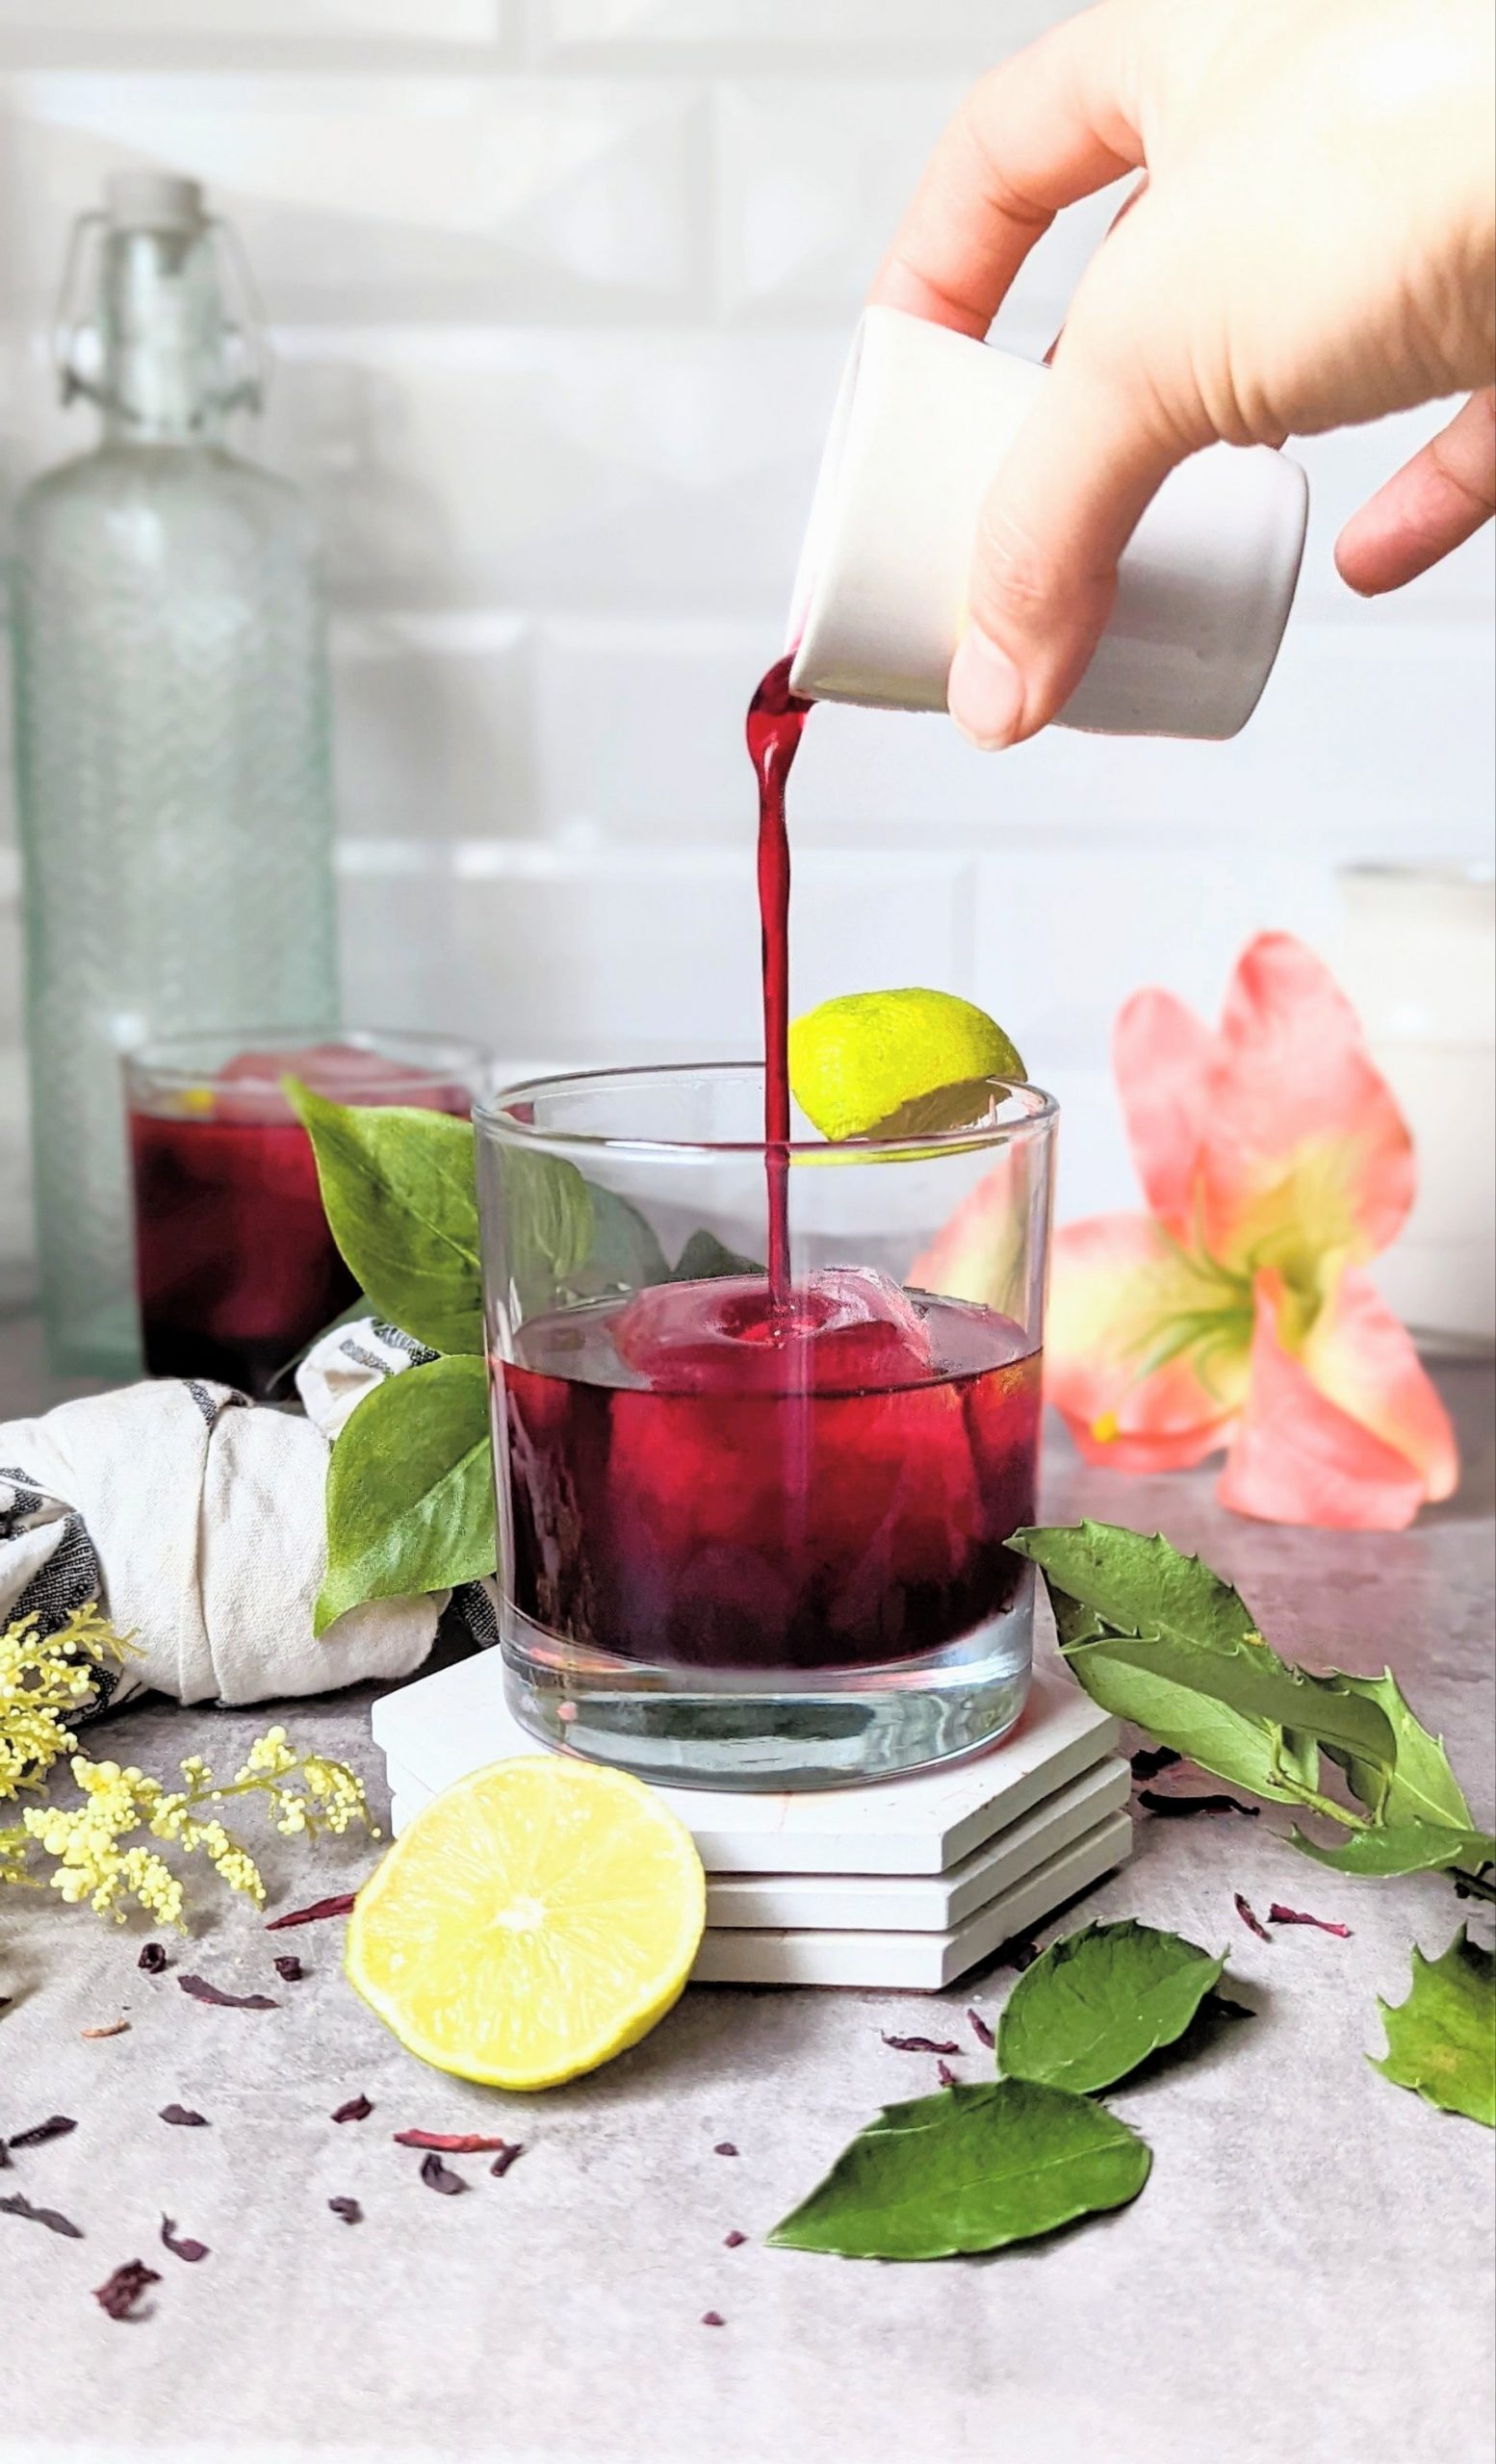 Hibiscus Margarita Recipe – A Refreshing Summer Cocktail